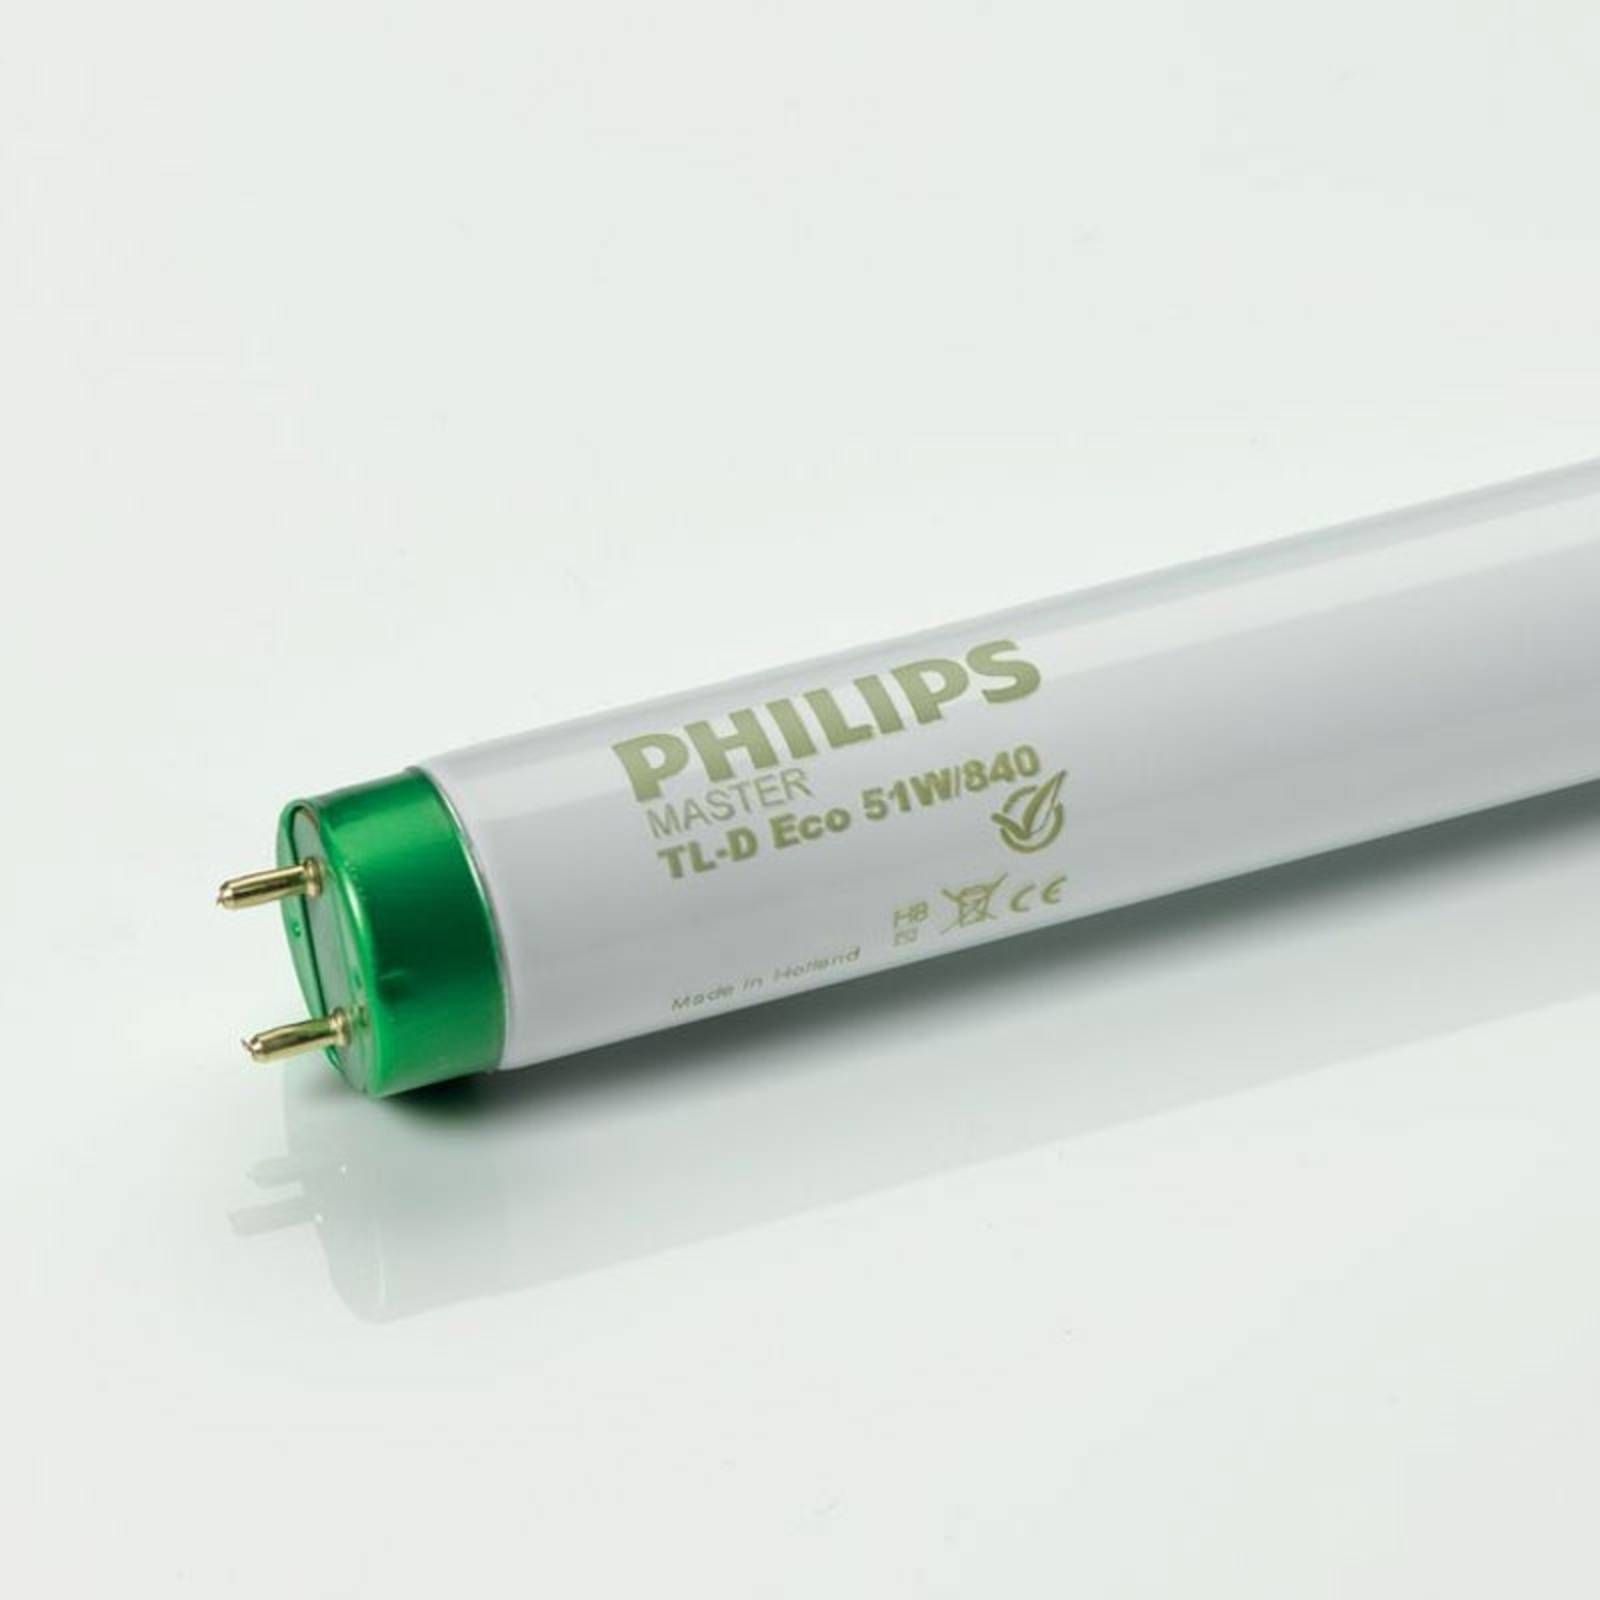 Philips Žiarivka G13 T8 Master TL-D Eco 840 32 W, G13, Energialuokka: G, P: 121.36 cm